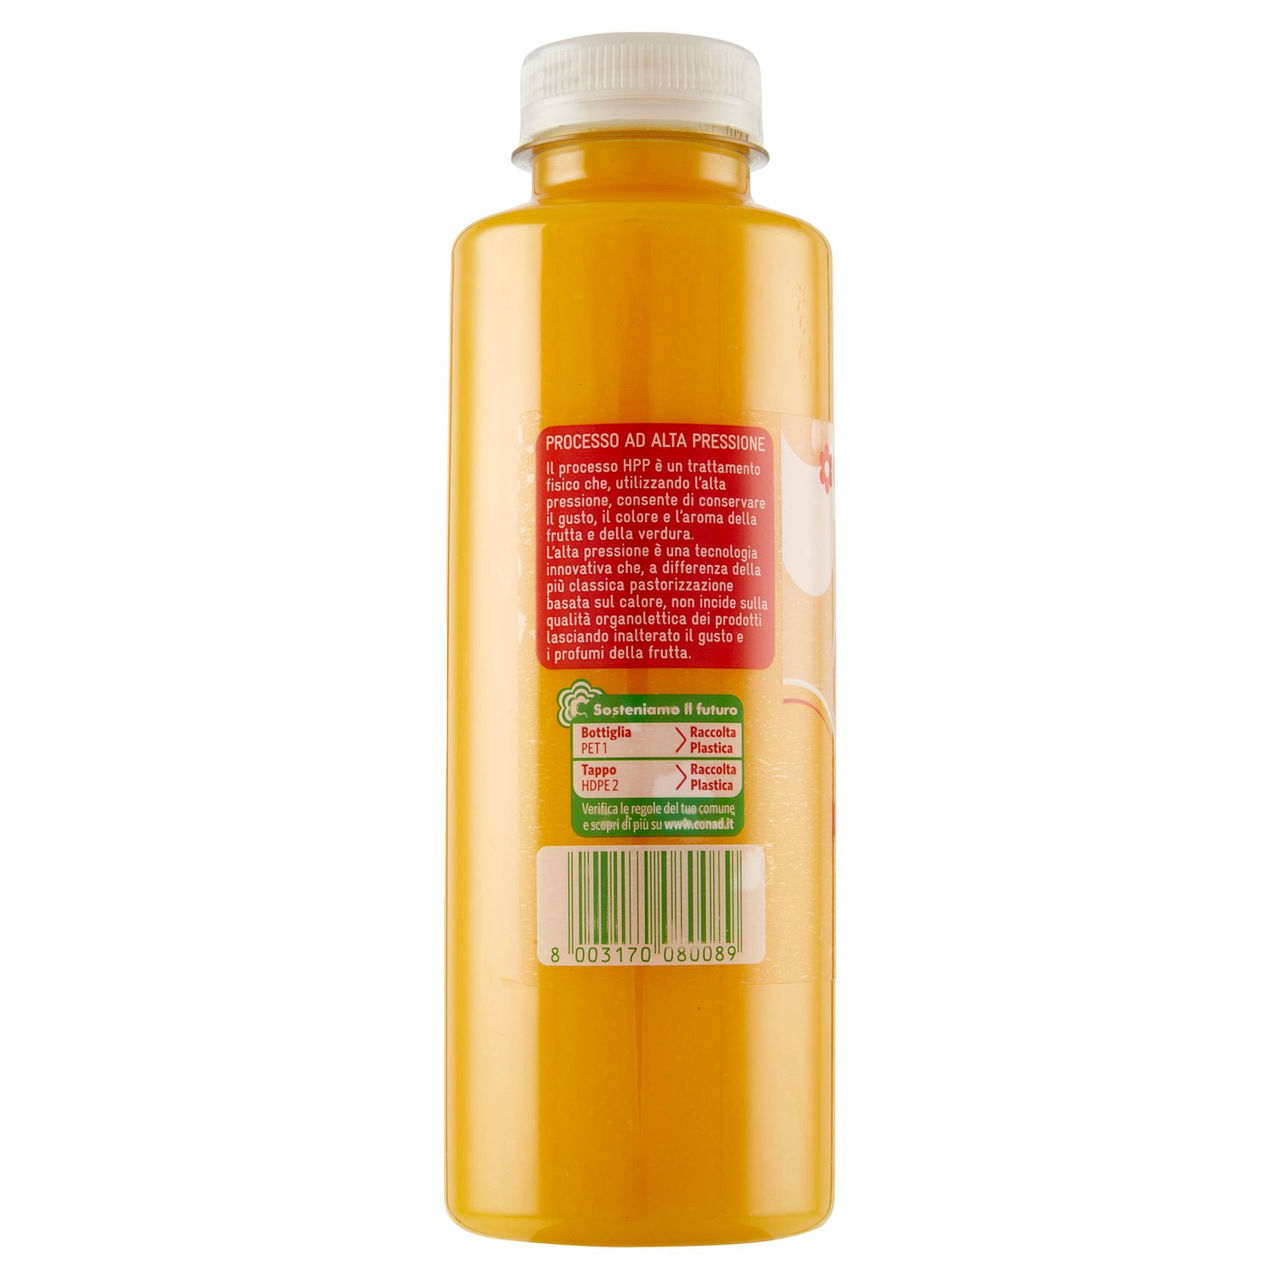 Arancia 500 ml Conad in vendita online